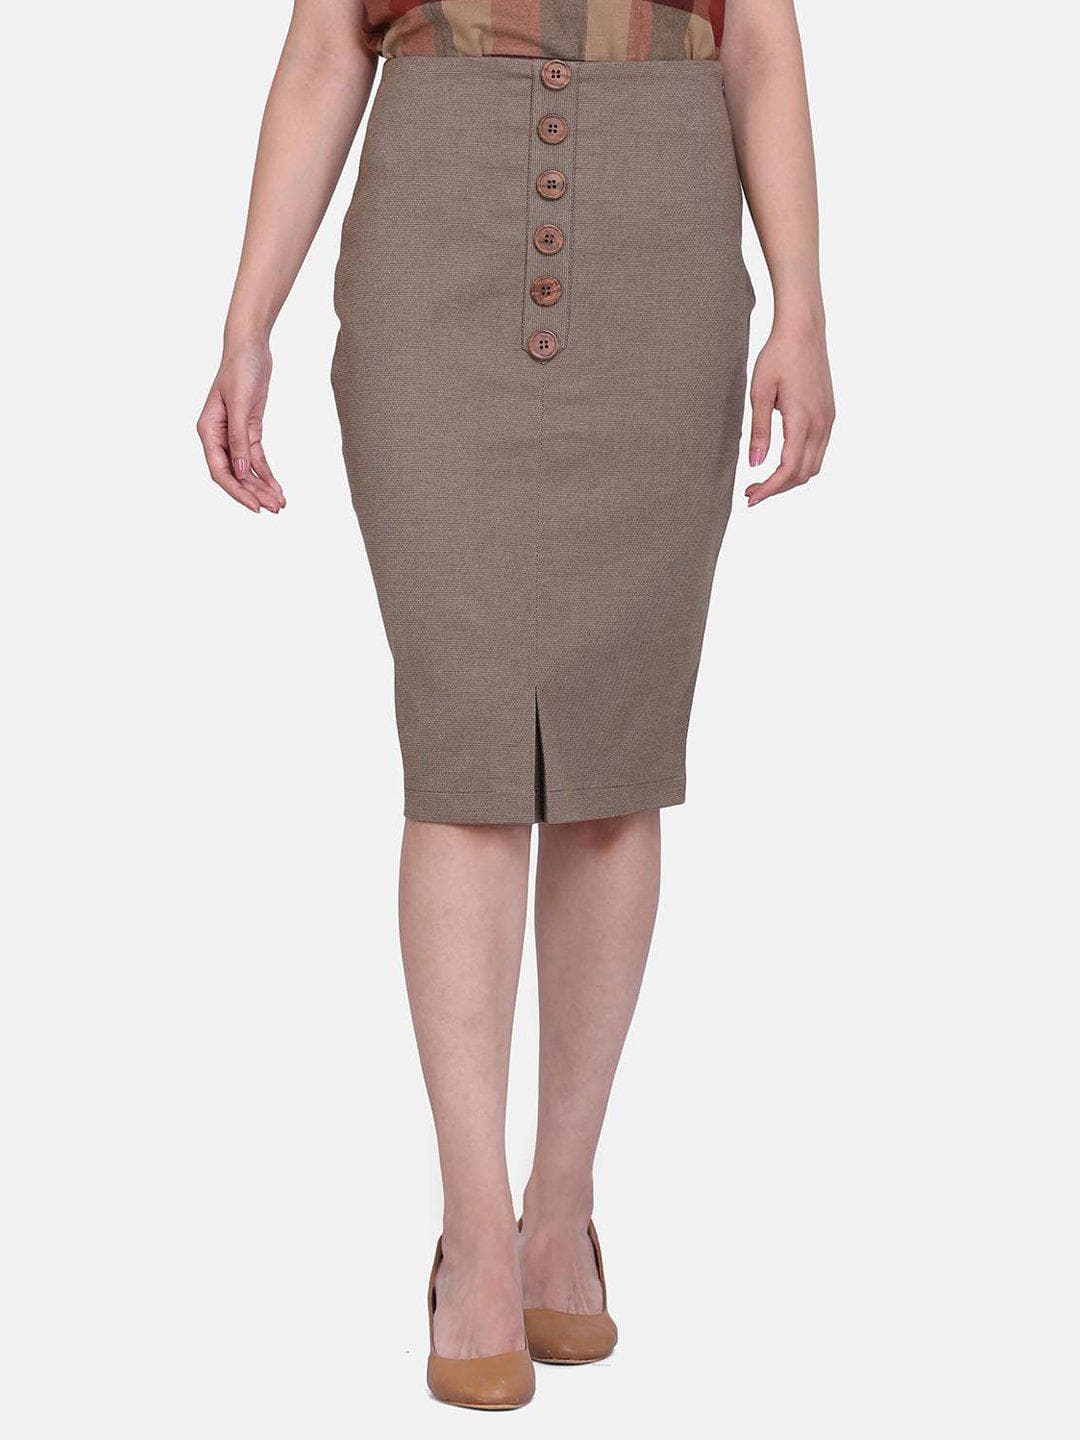 Ginger Brown Button Detail Cotton Pencil Skirt